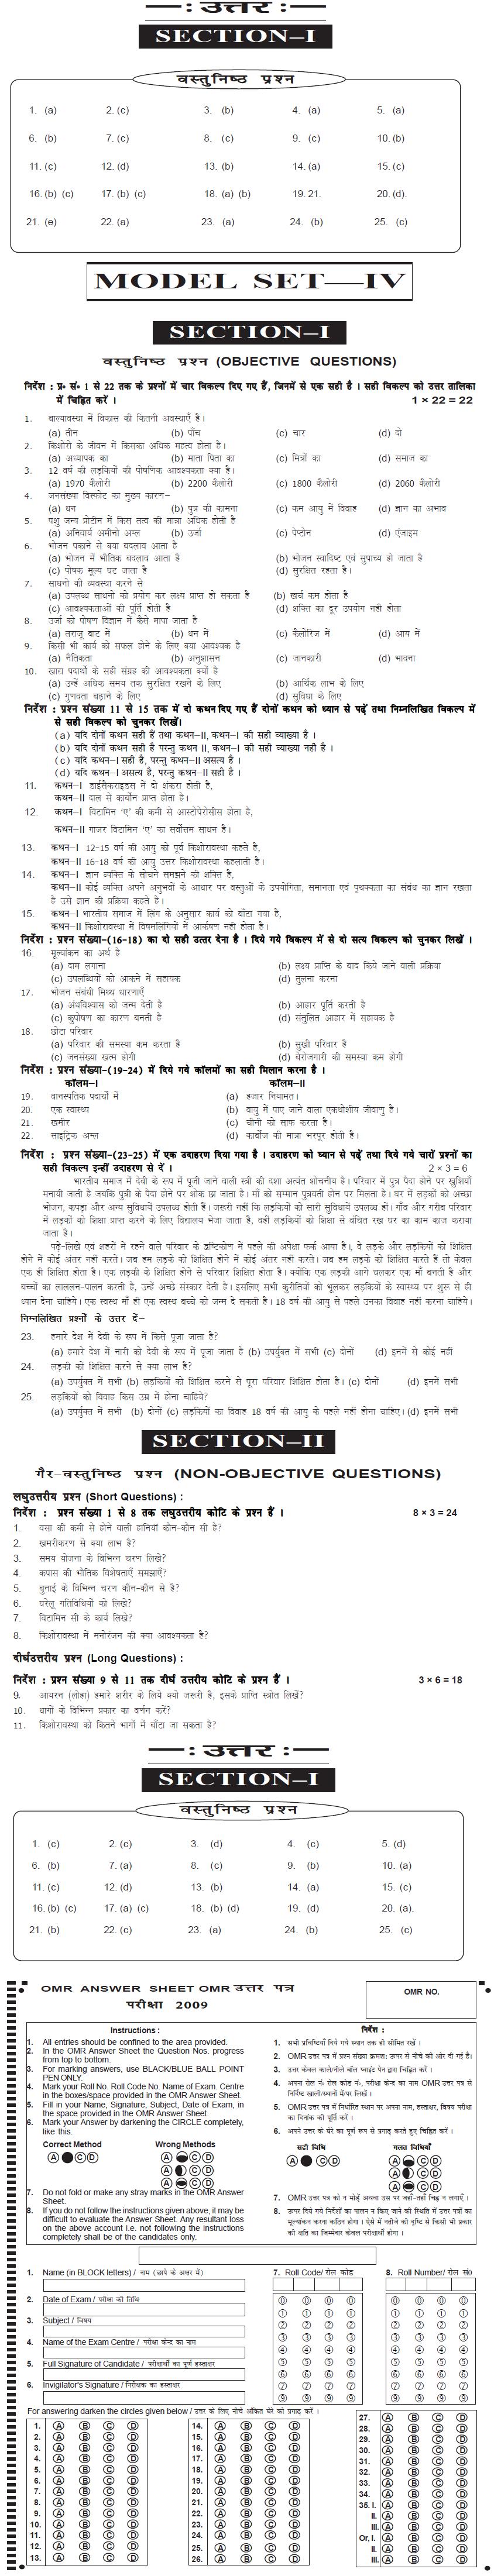 Bihar Board Class XI Arts Model Question Papers - Home Science